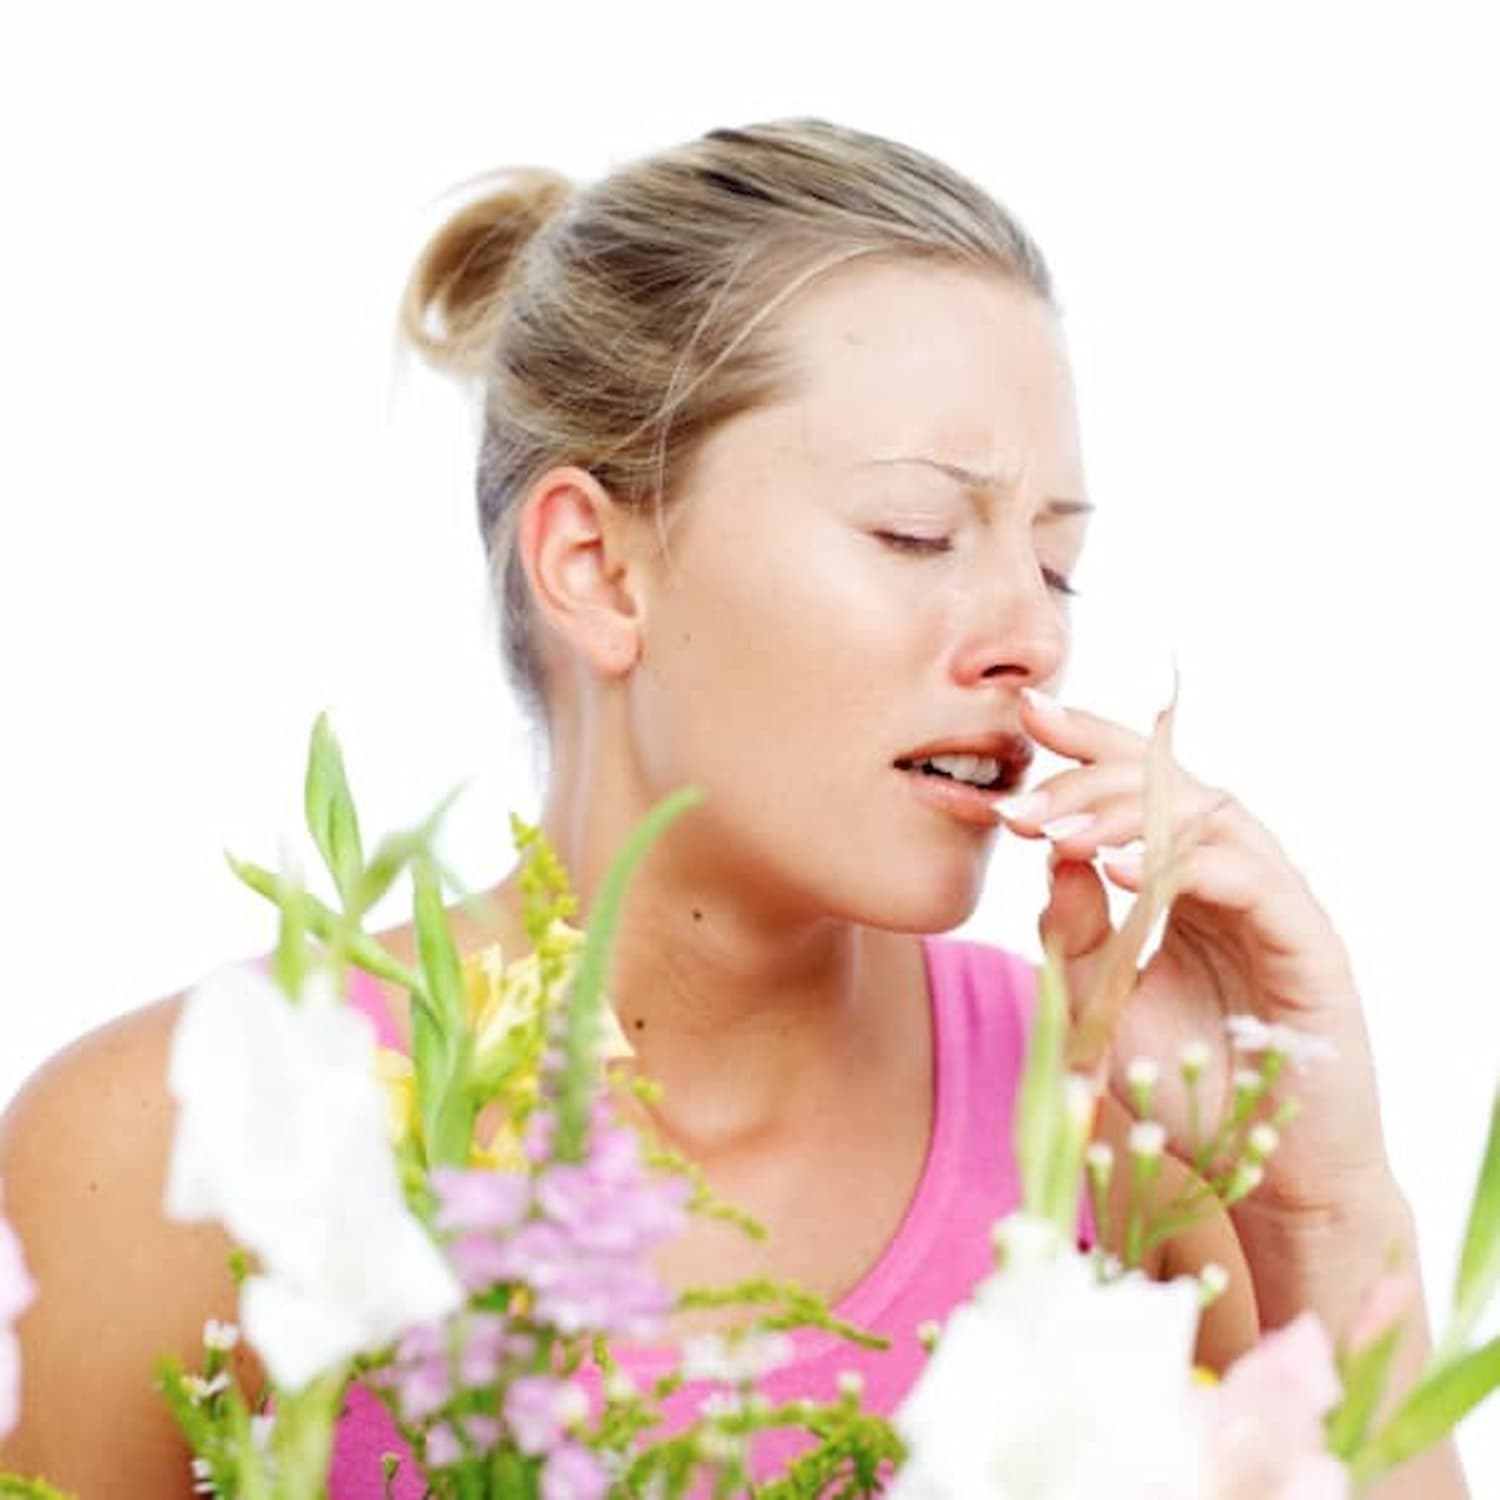 Top 7 Natural Remedies & Herbal Medicines for Hay Fever